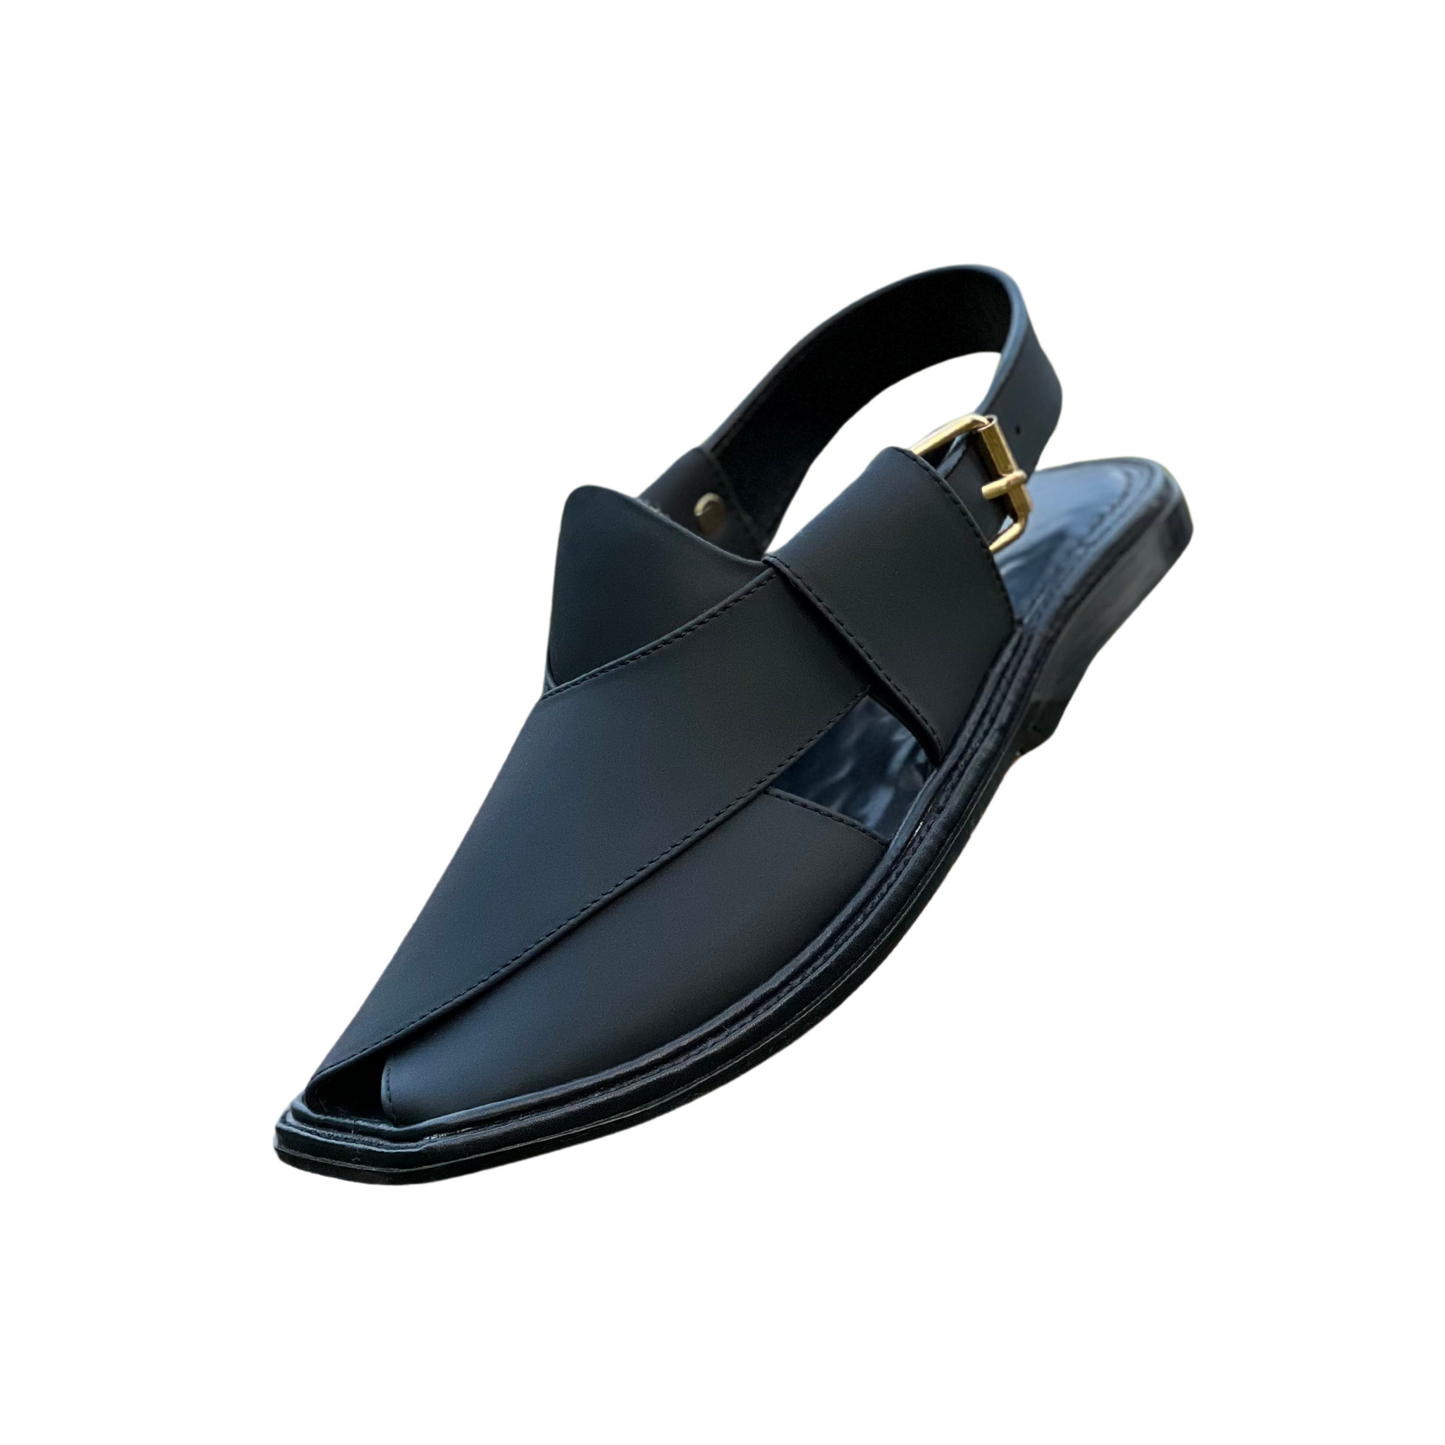 Price of black leather Peshawari sandals 